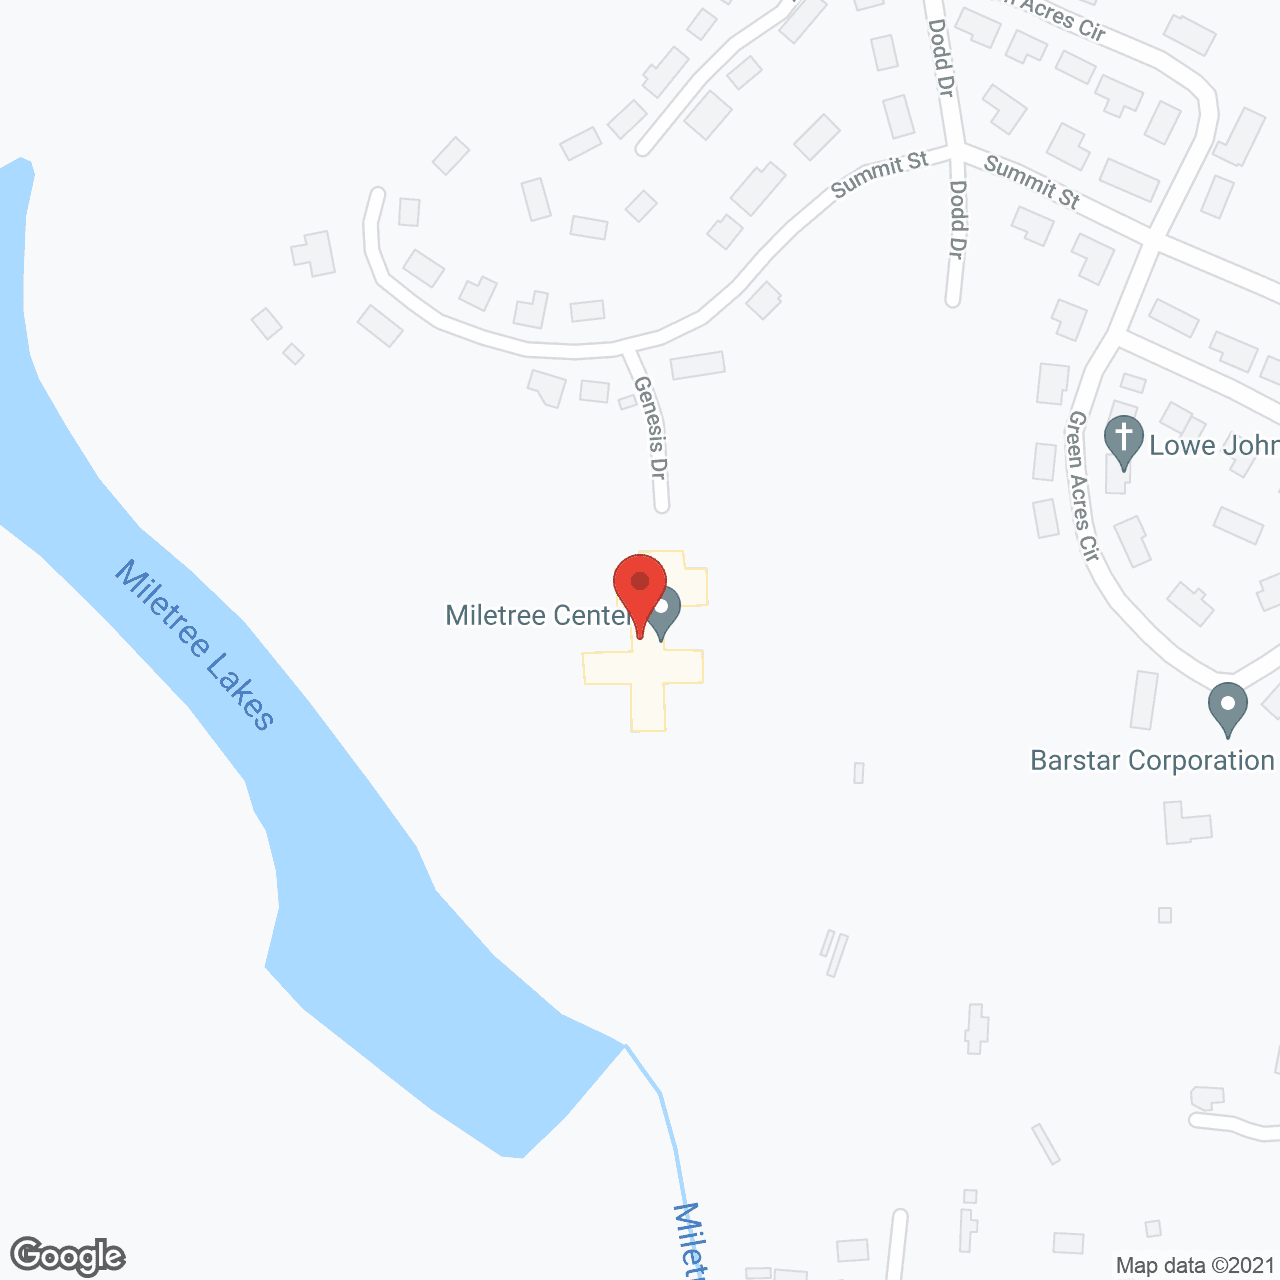 Miletree Center in google map